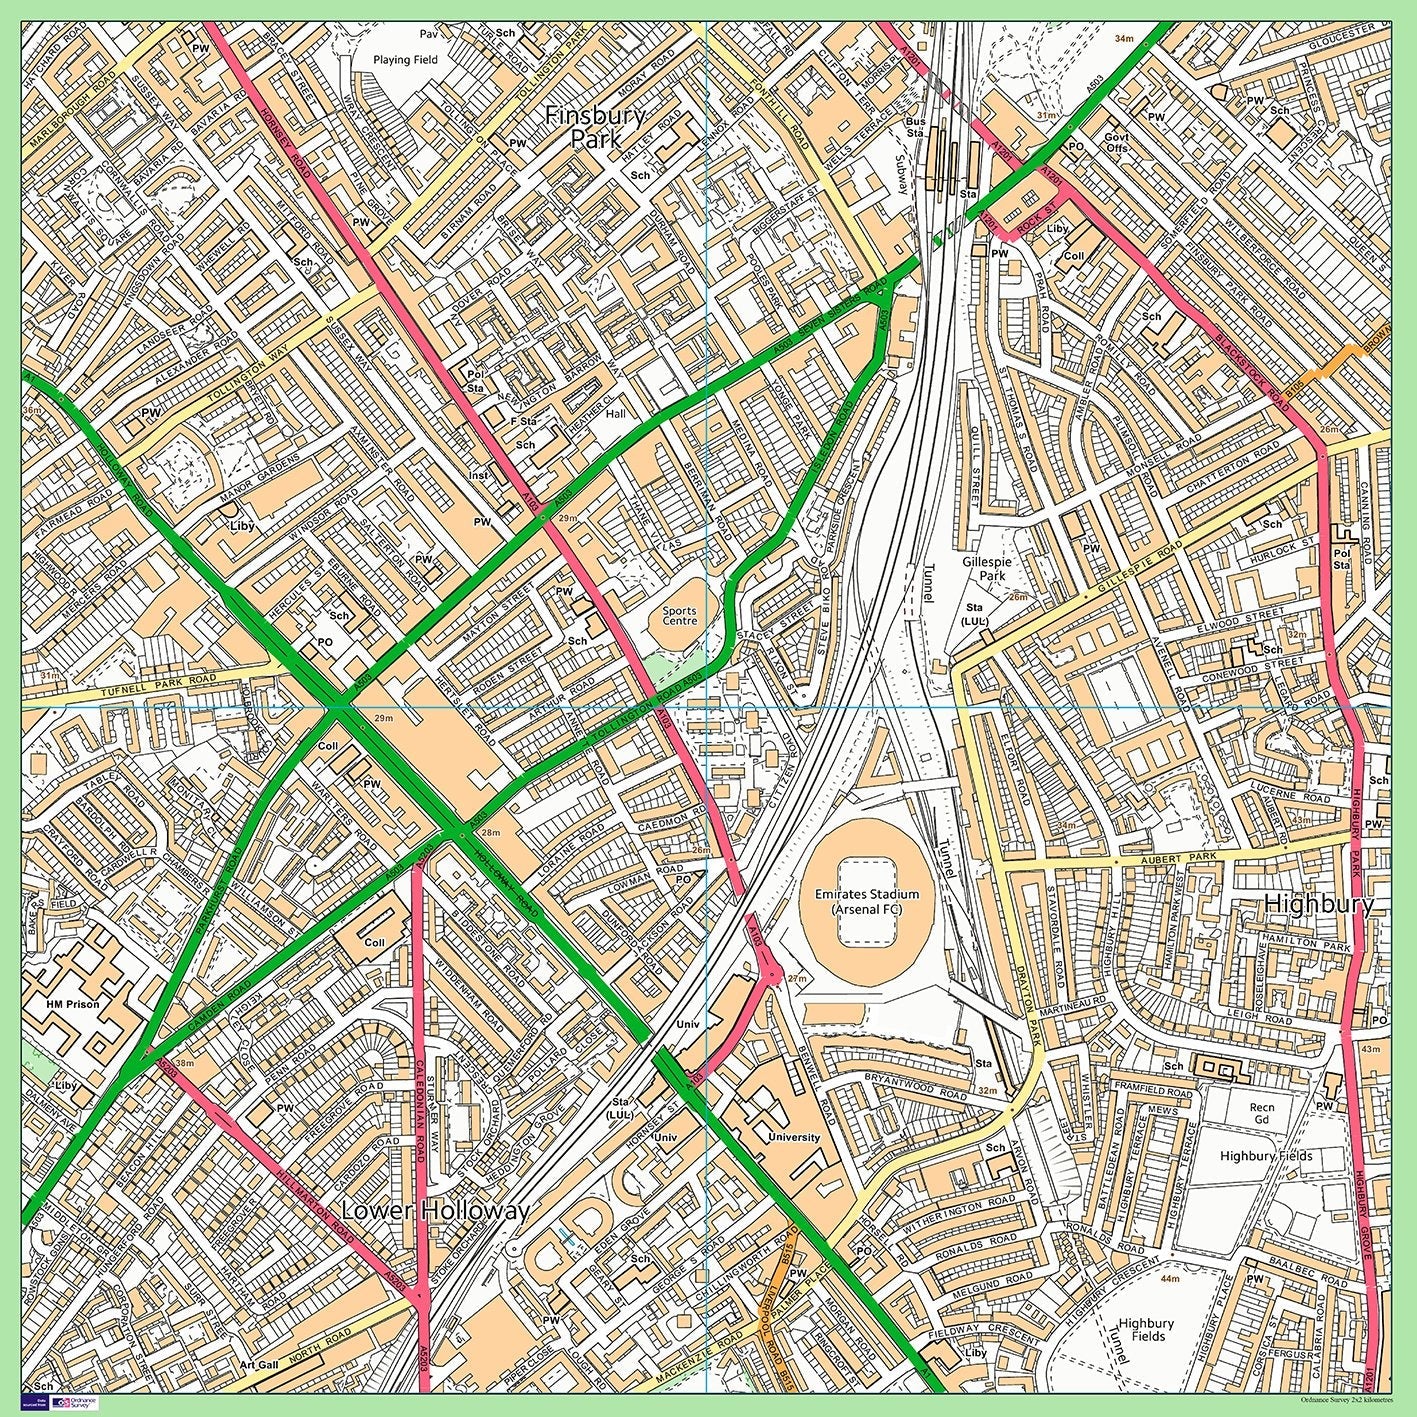 Postcode Centred Vinyl Ordnance Survey Street Map - 1x1m Size - 2x2km Area